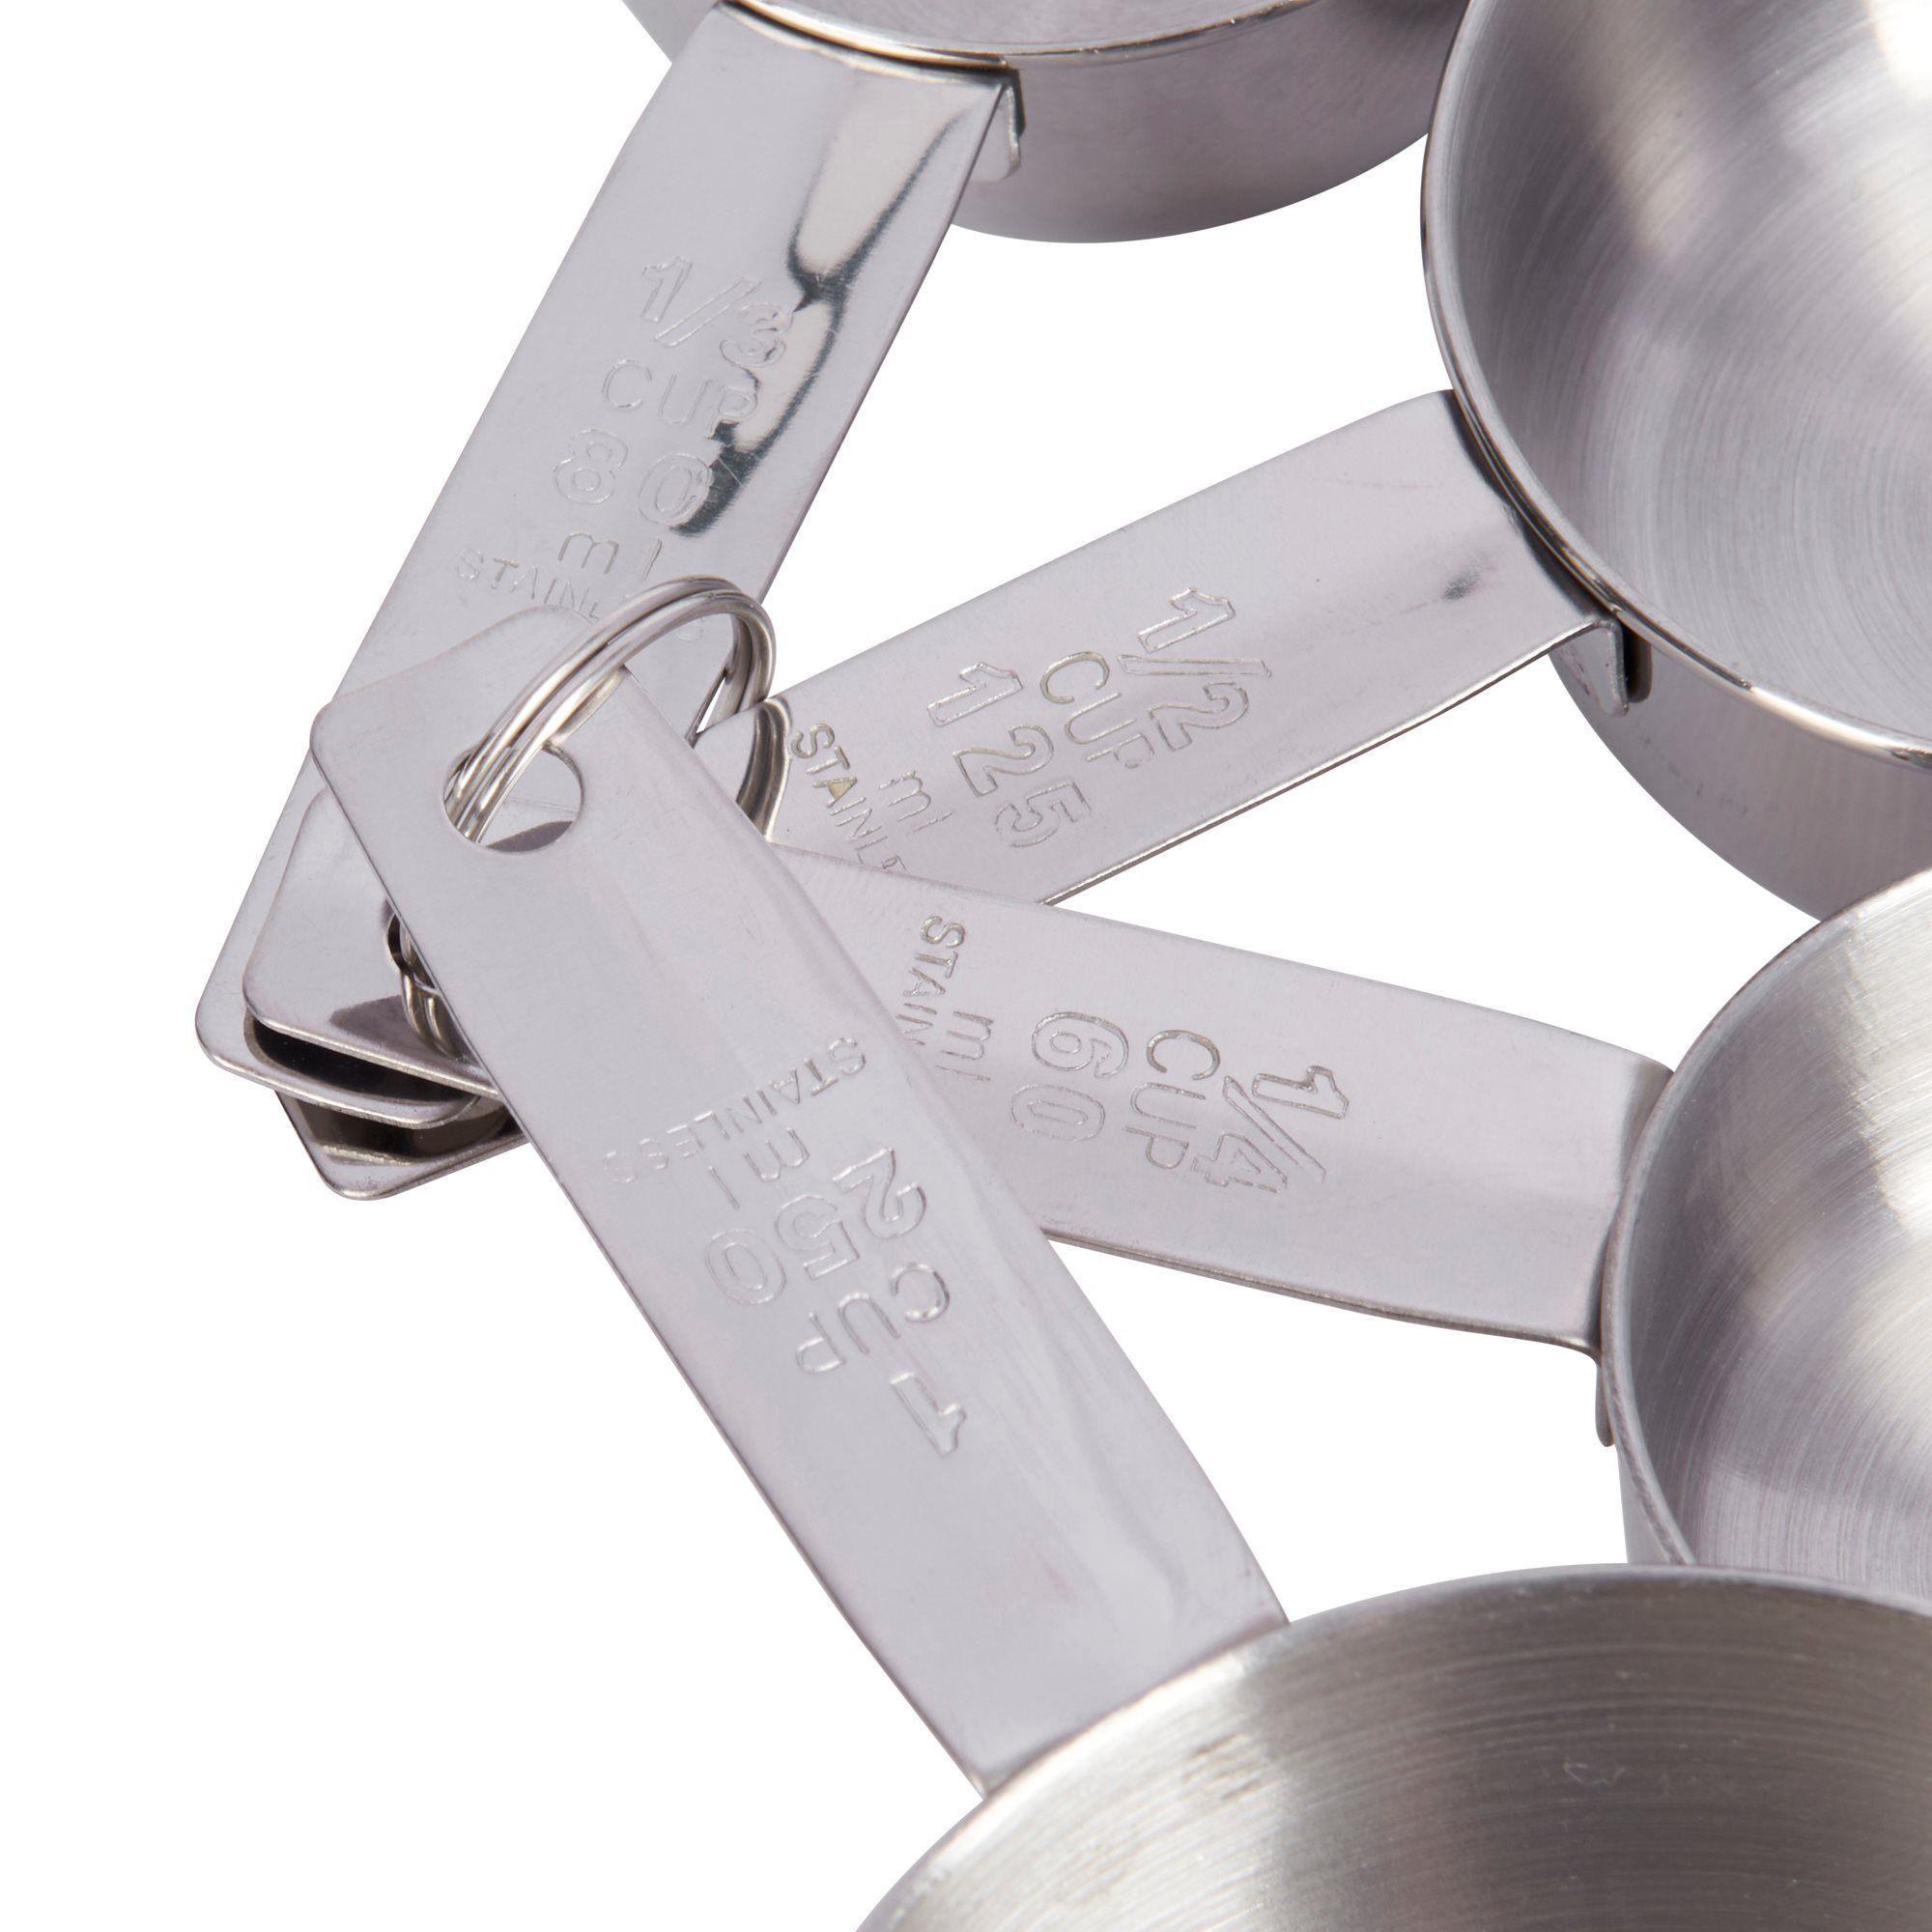 Set de 10 cucharas medidoras para reposteria de la marca Kitchen Craft